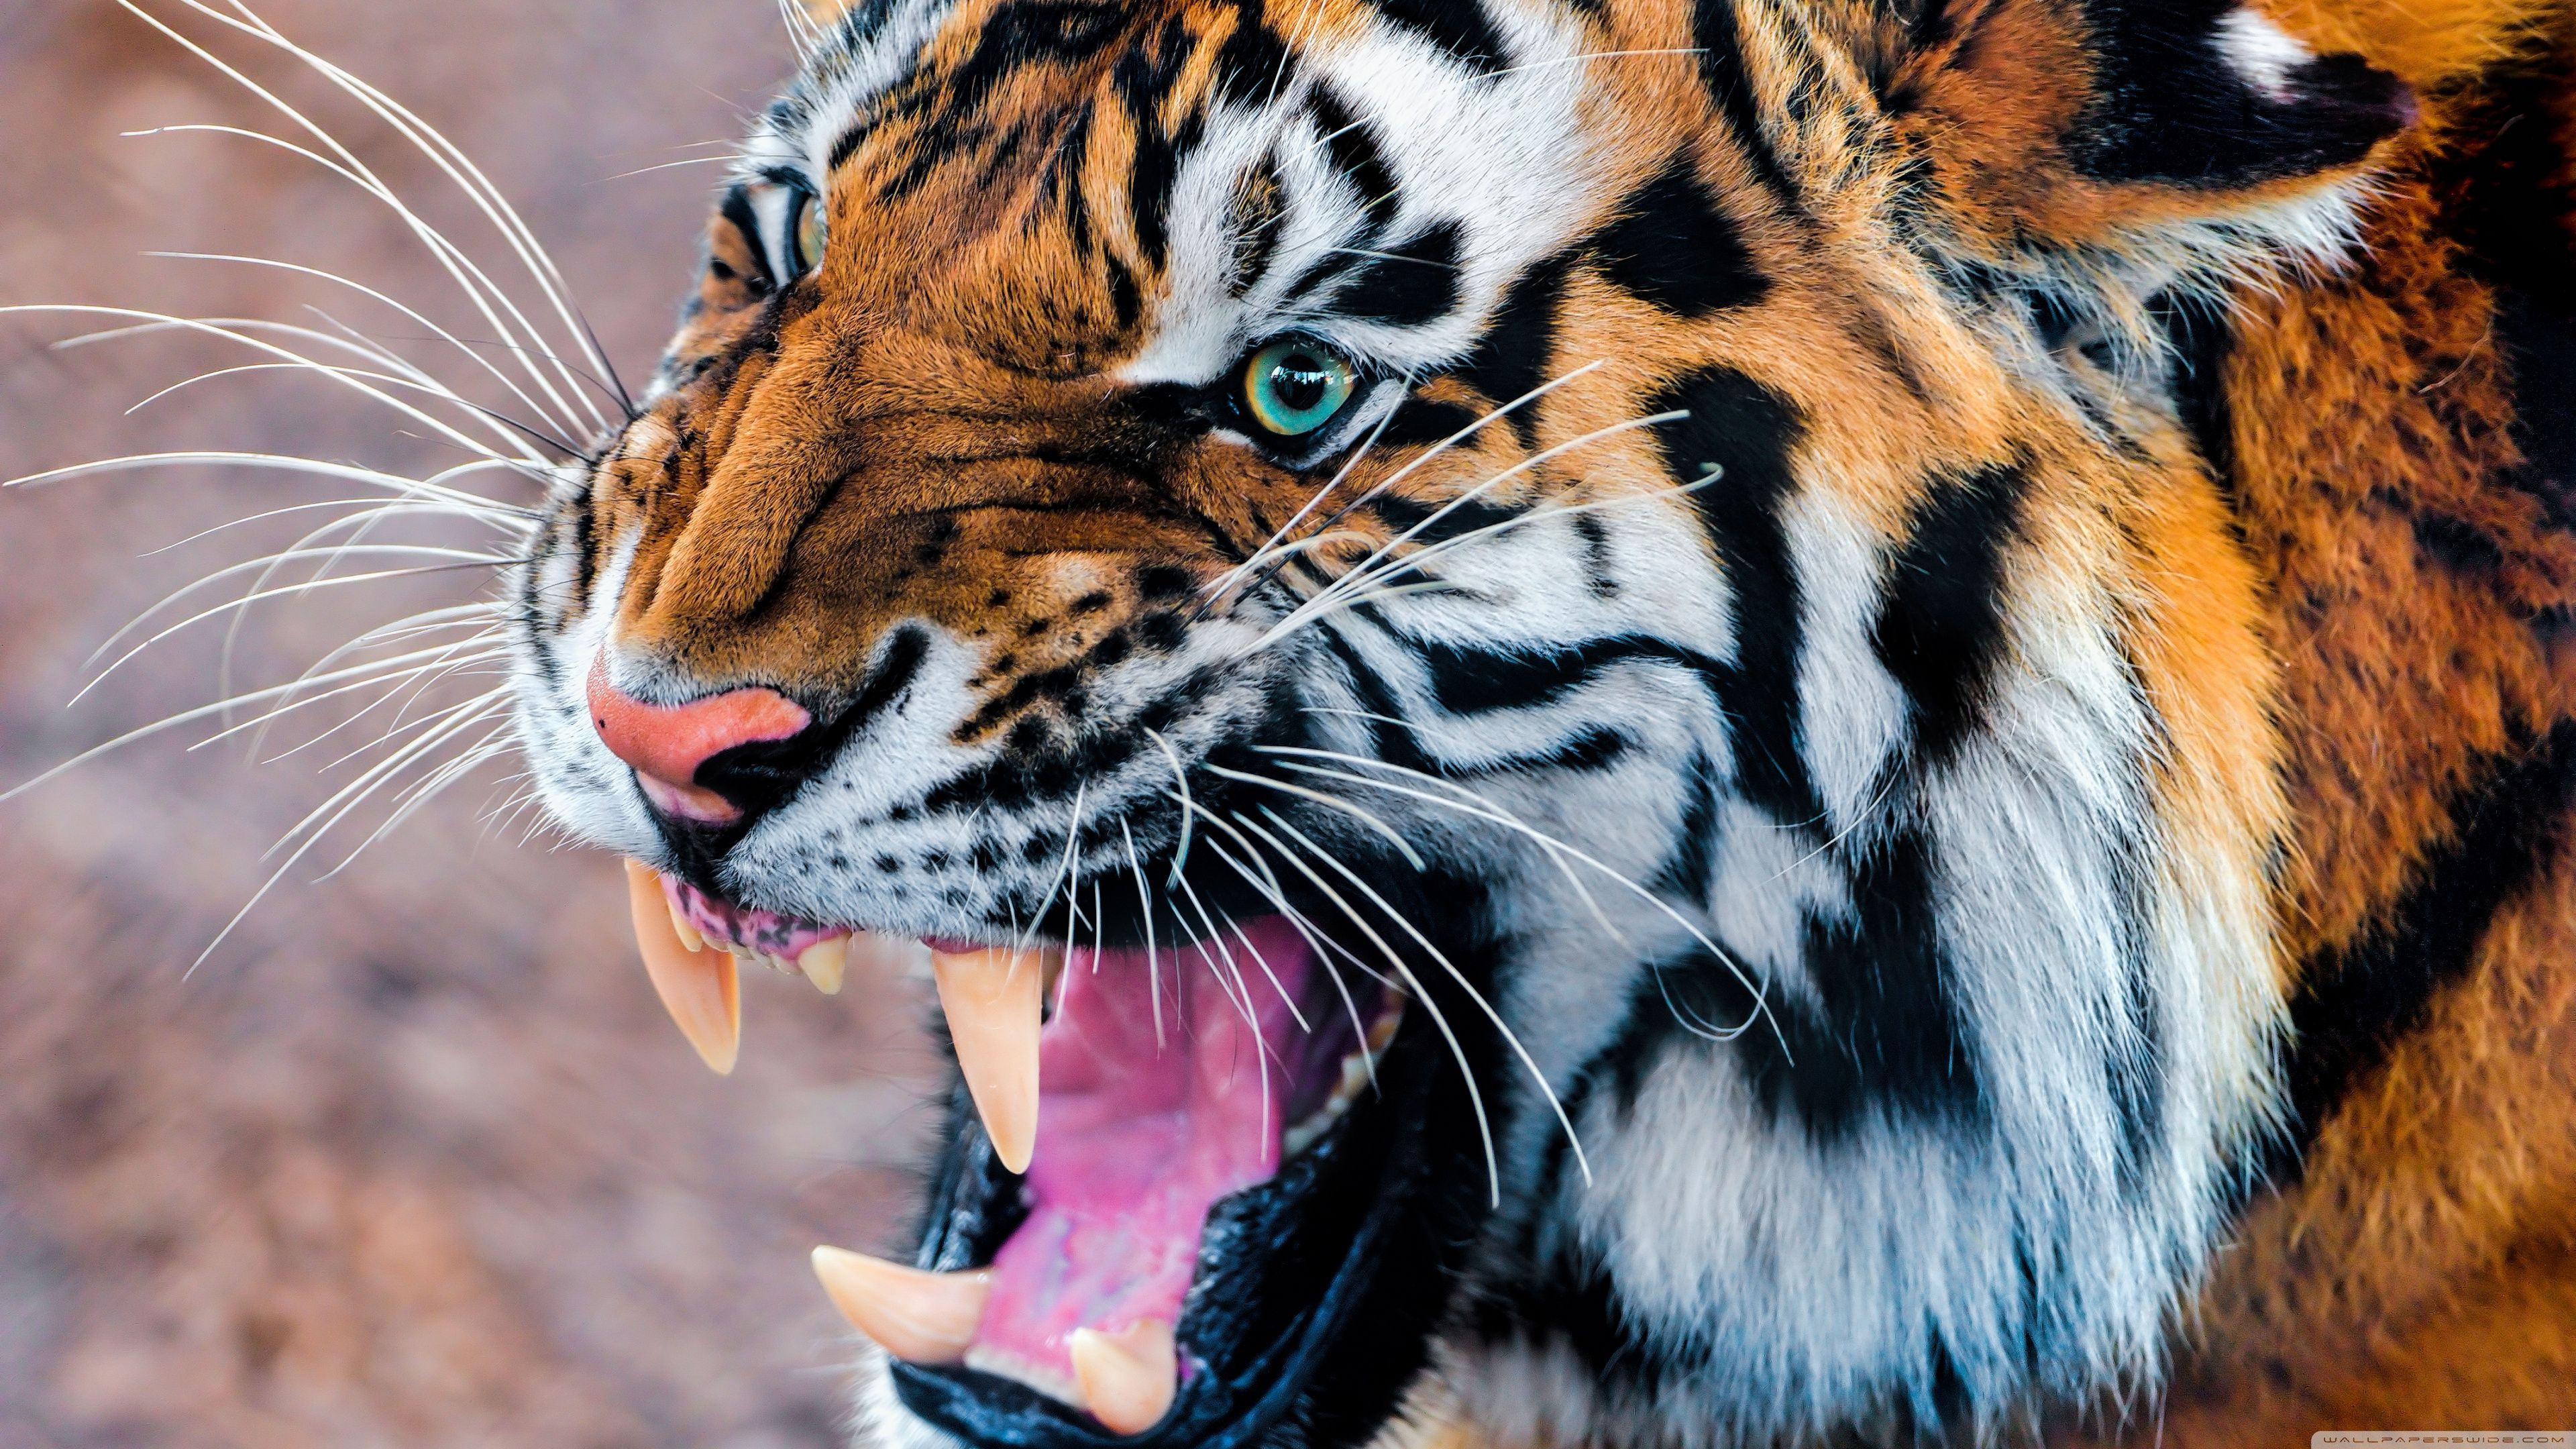 Snarling Tiger ❤ 4K HD Desktop Wallpaper for 4K Ultra HD TV • Wide